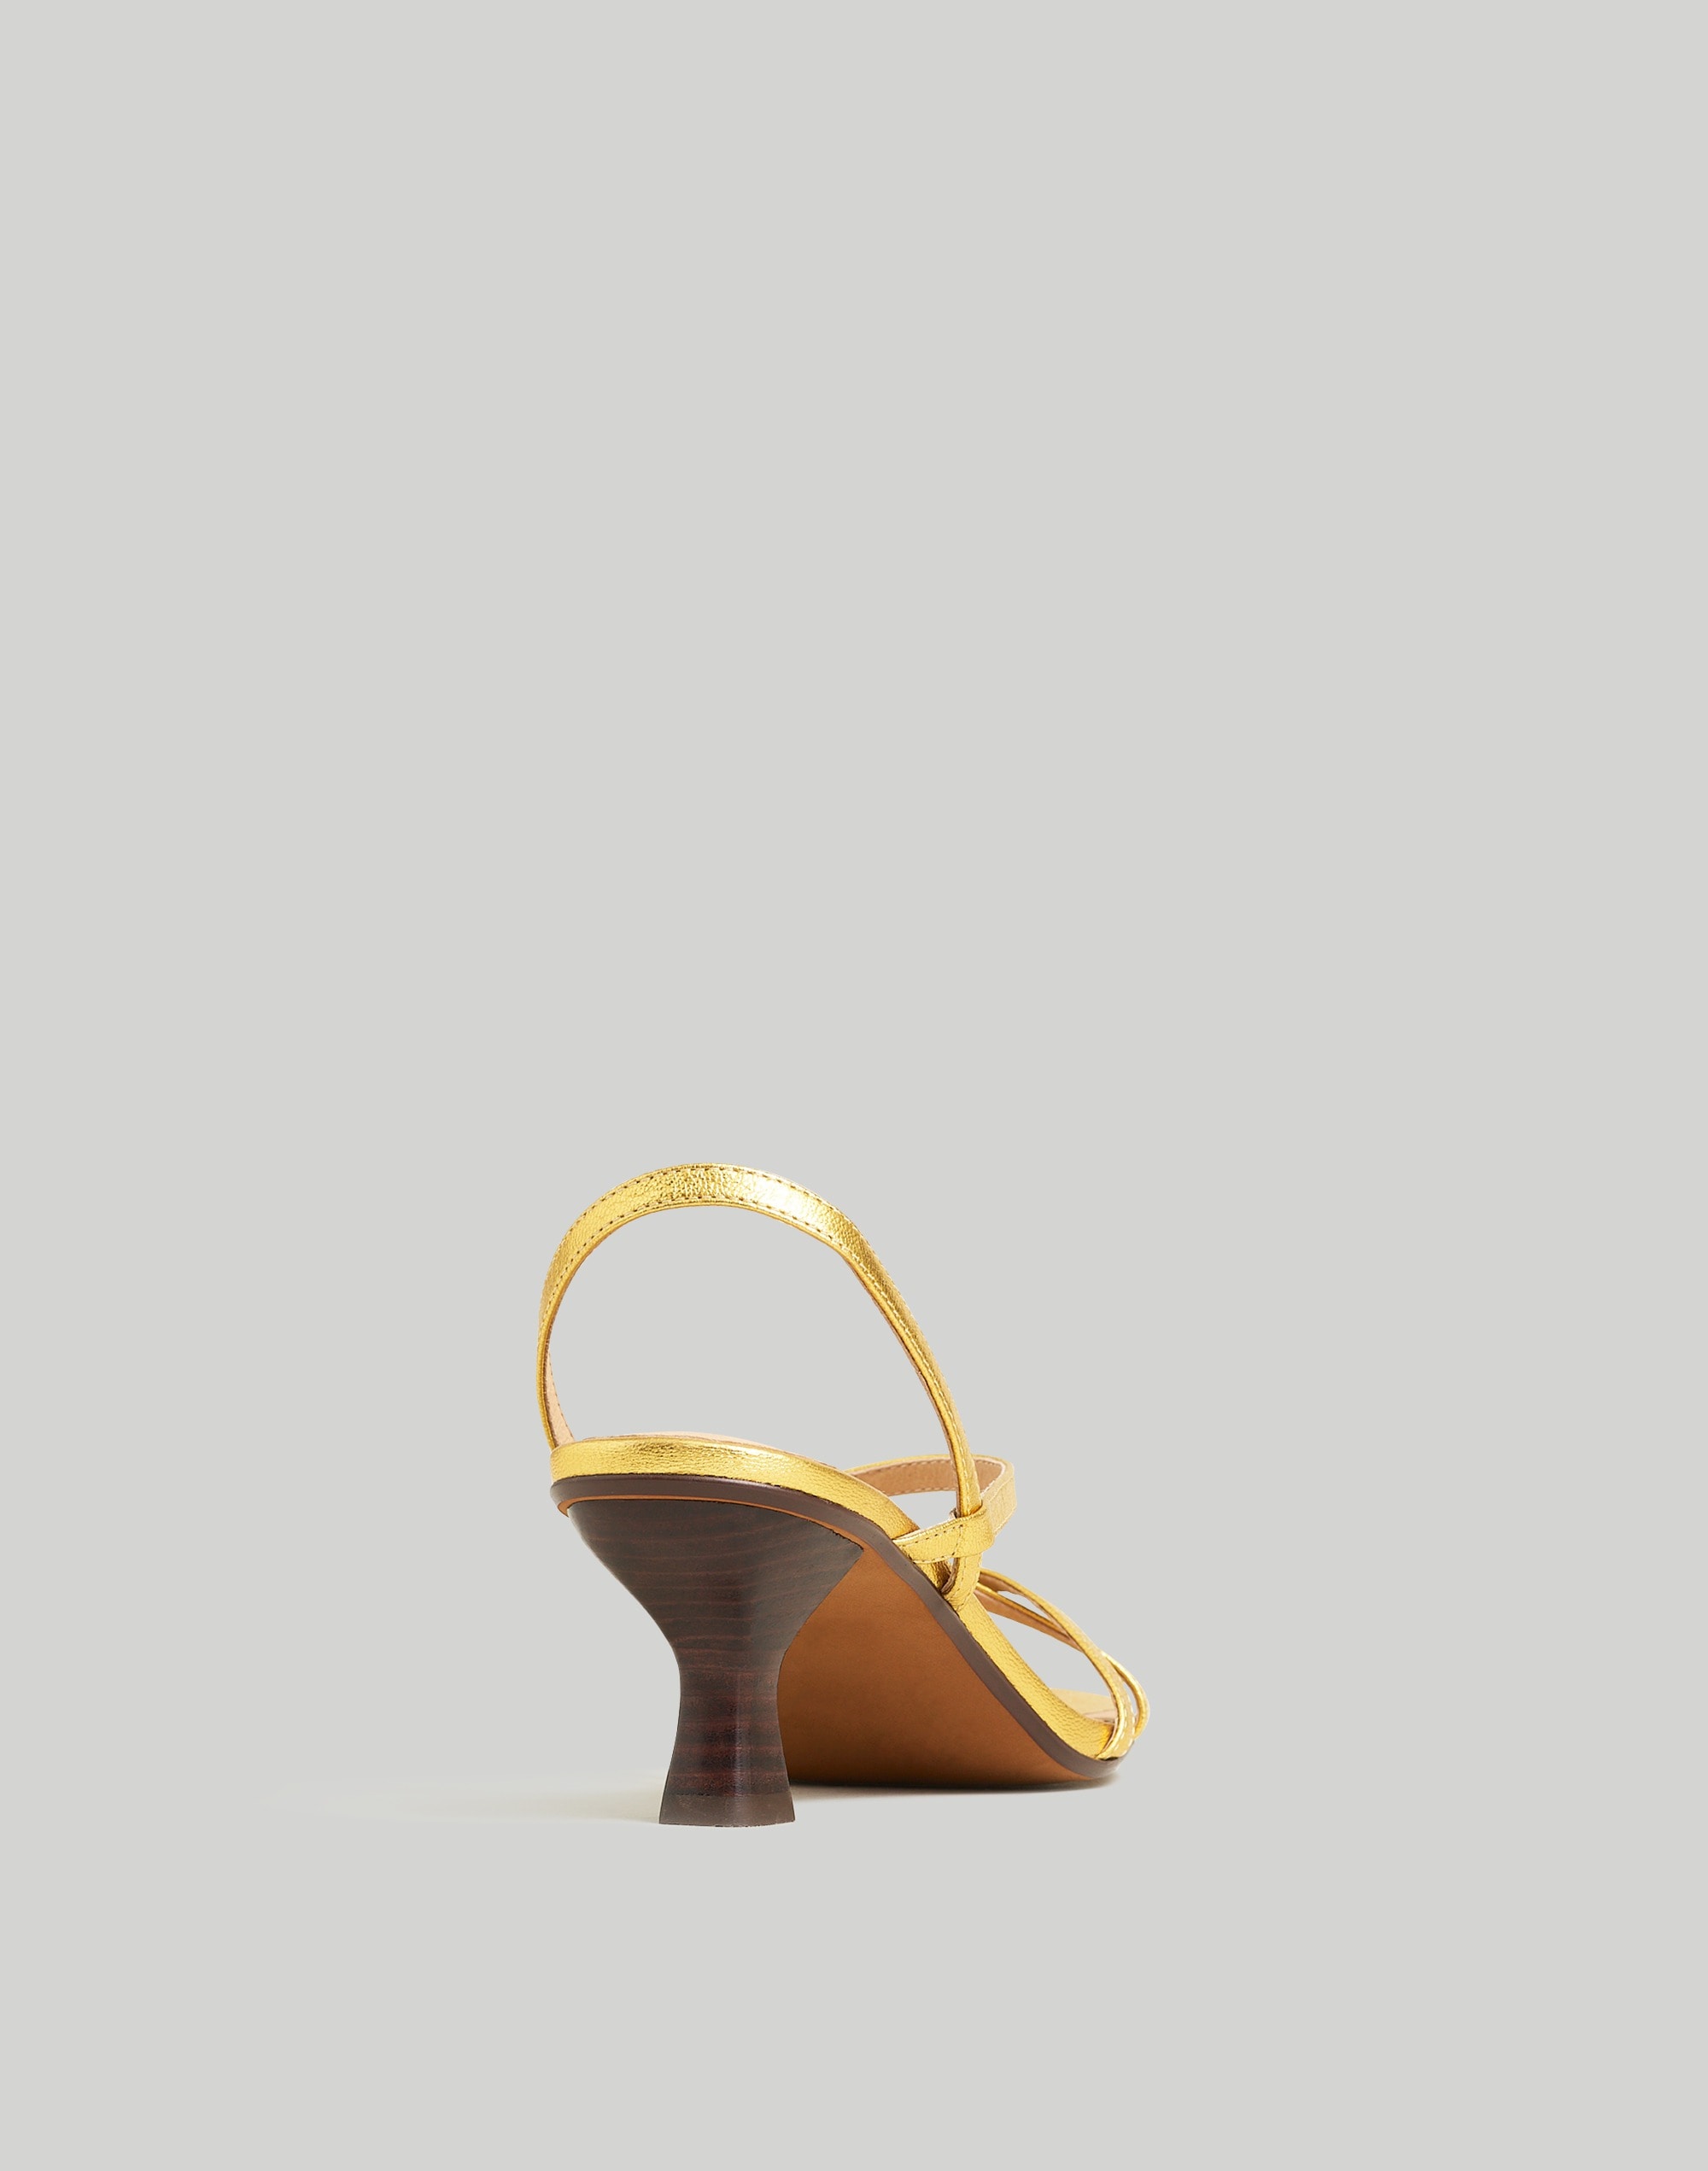 The Felicia Slingback Sandal in Metallic Felicia